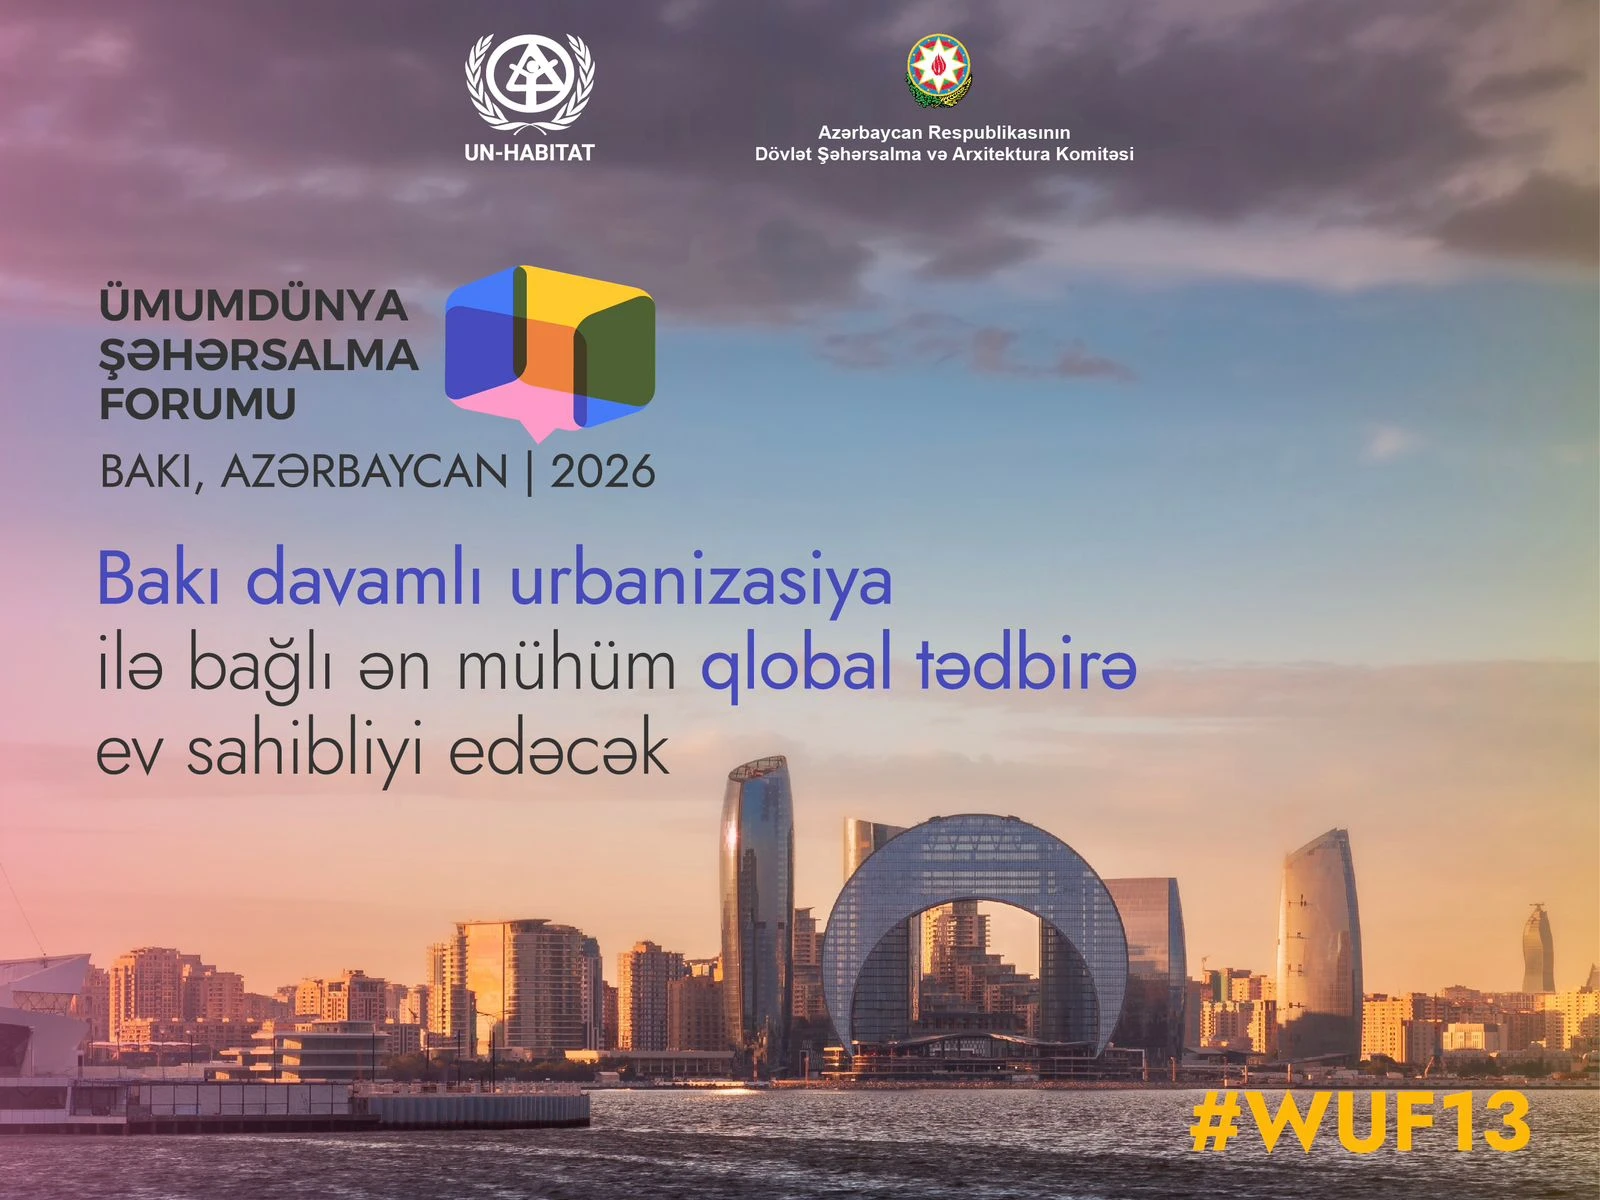 Baku will host the World Urban Forum in 2026!